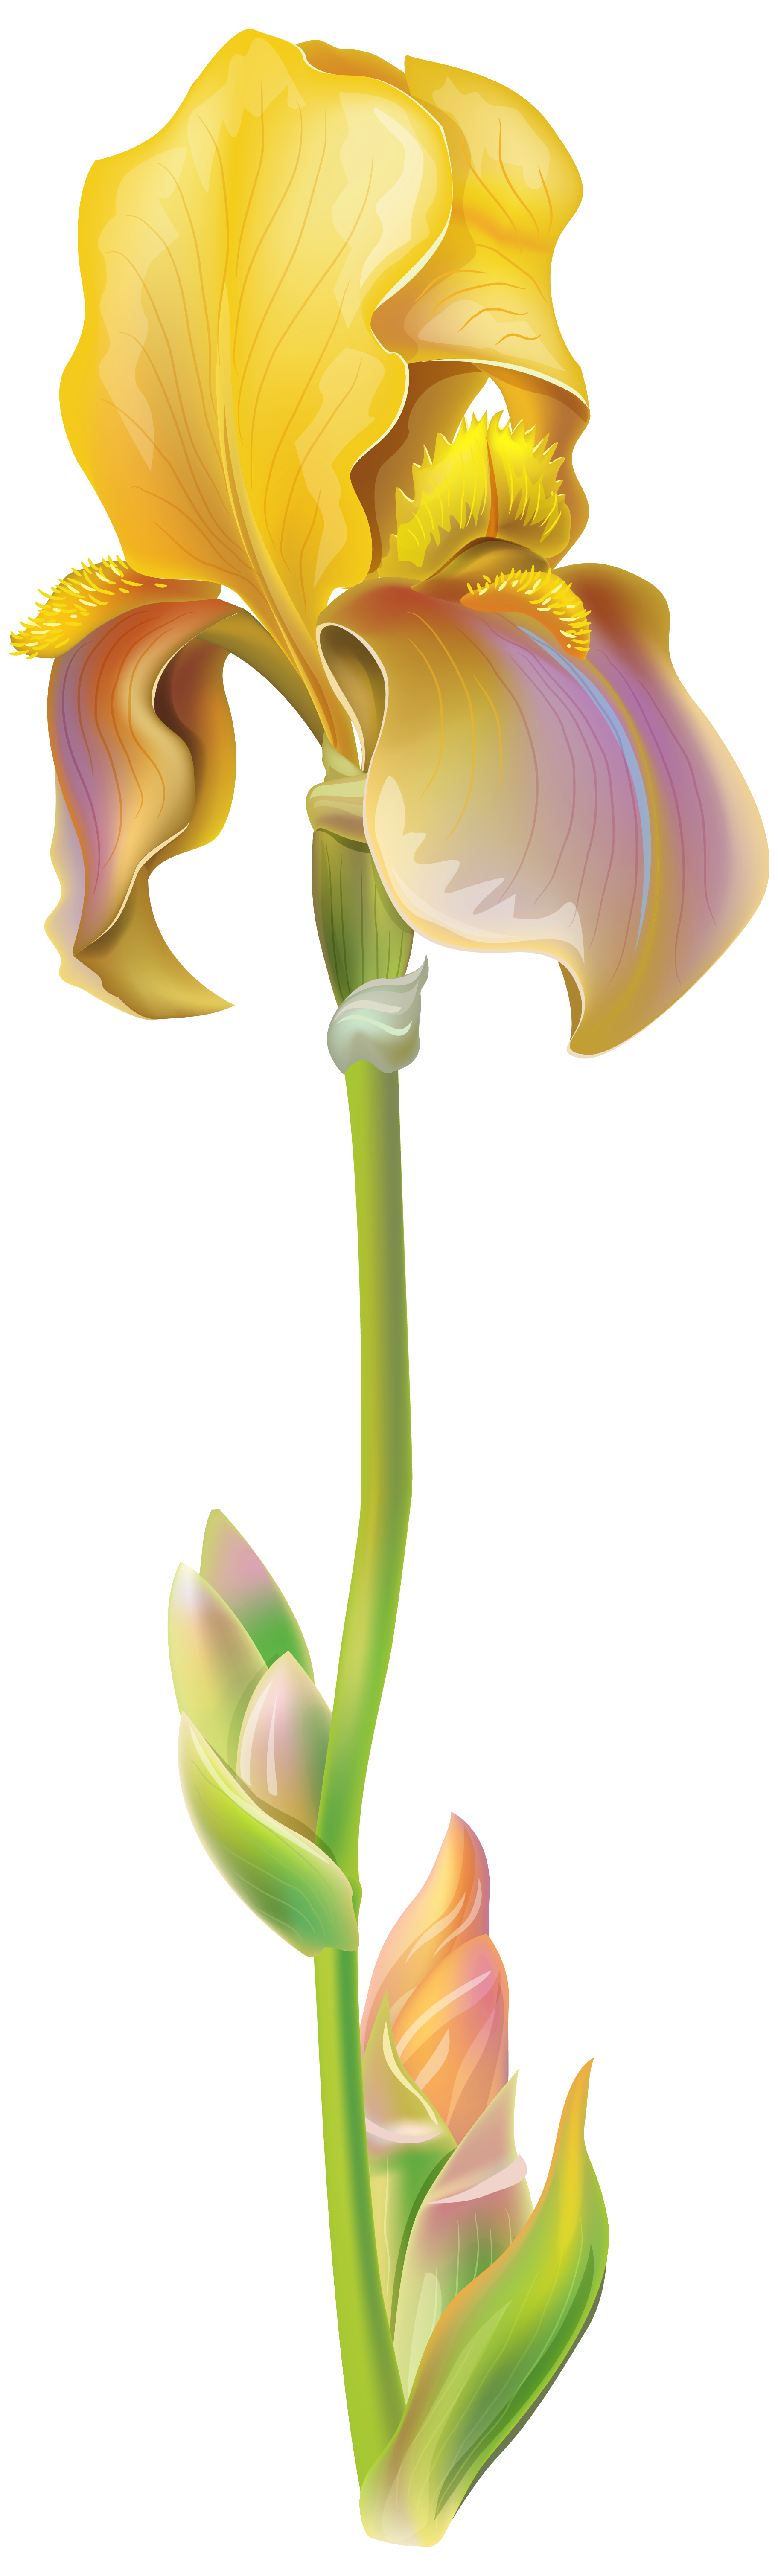 clipart iris flower - photo #27